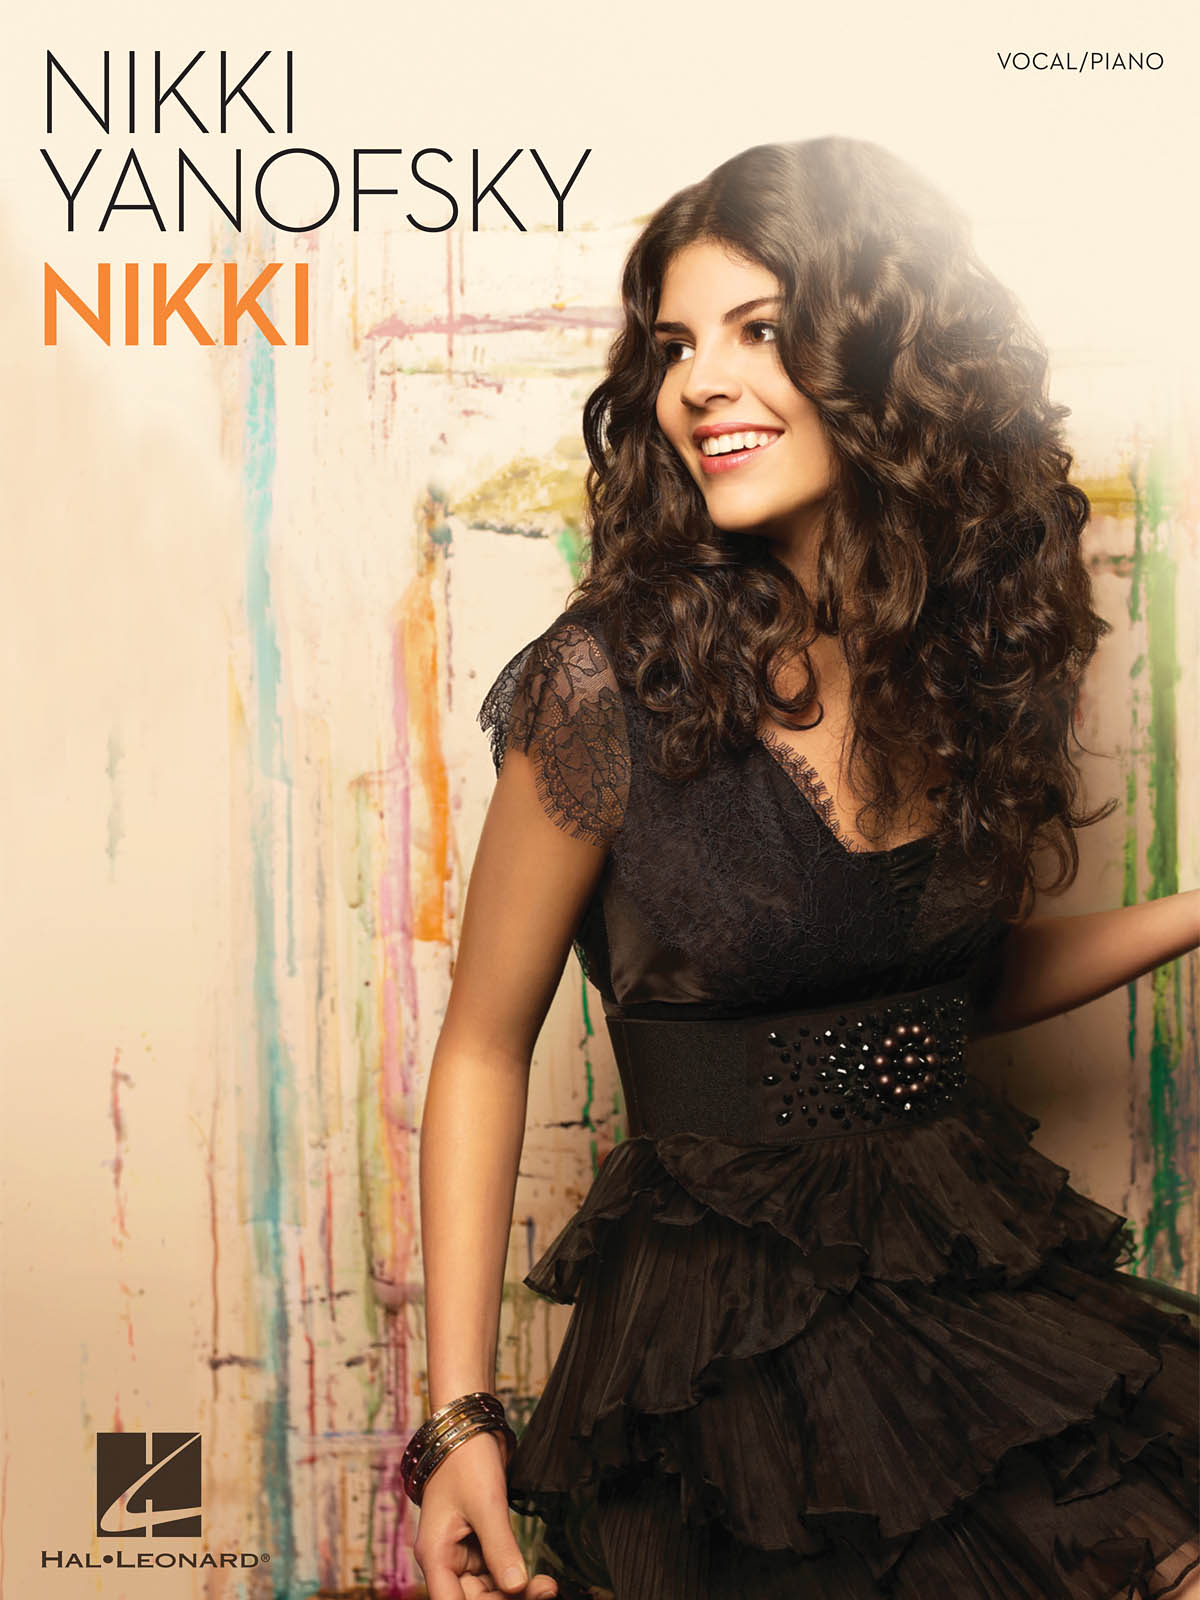 Nikki Yankofsky: Nikki Yanofsky - Nikki: Vocal and Piano: Album Songbook